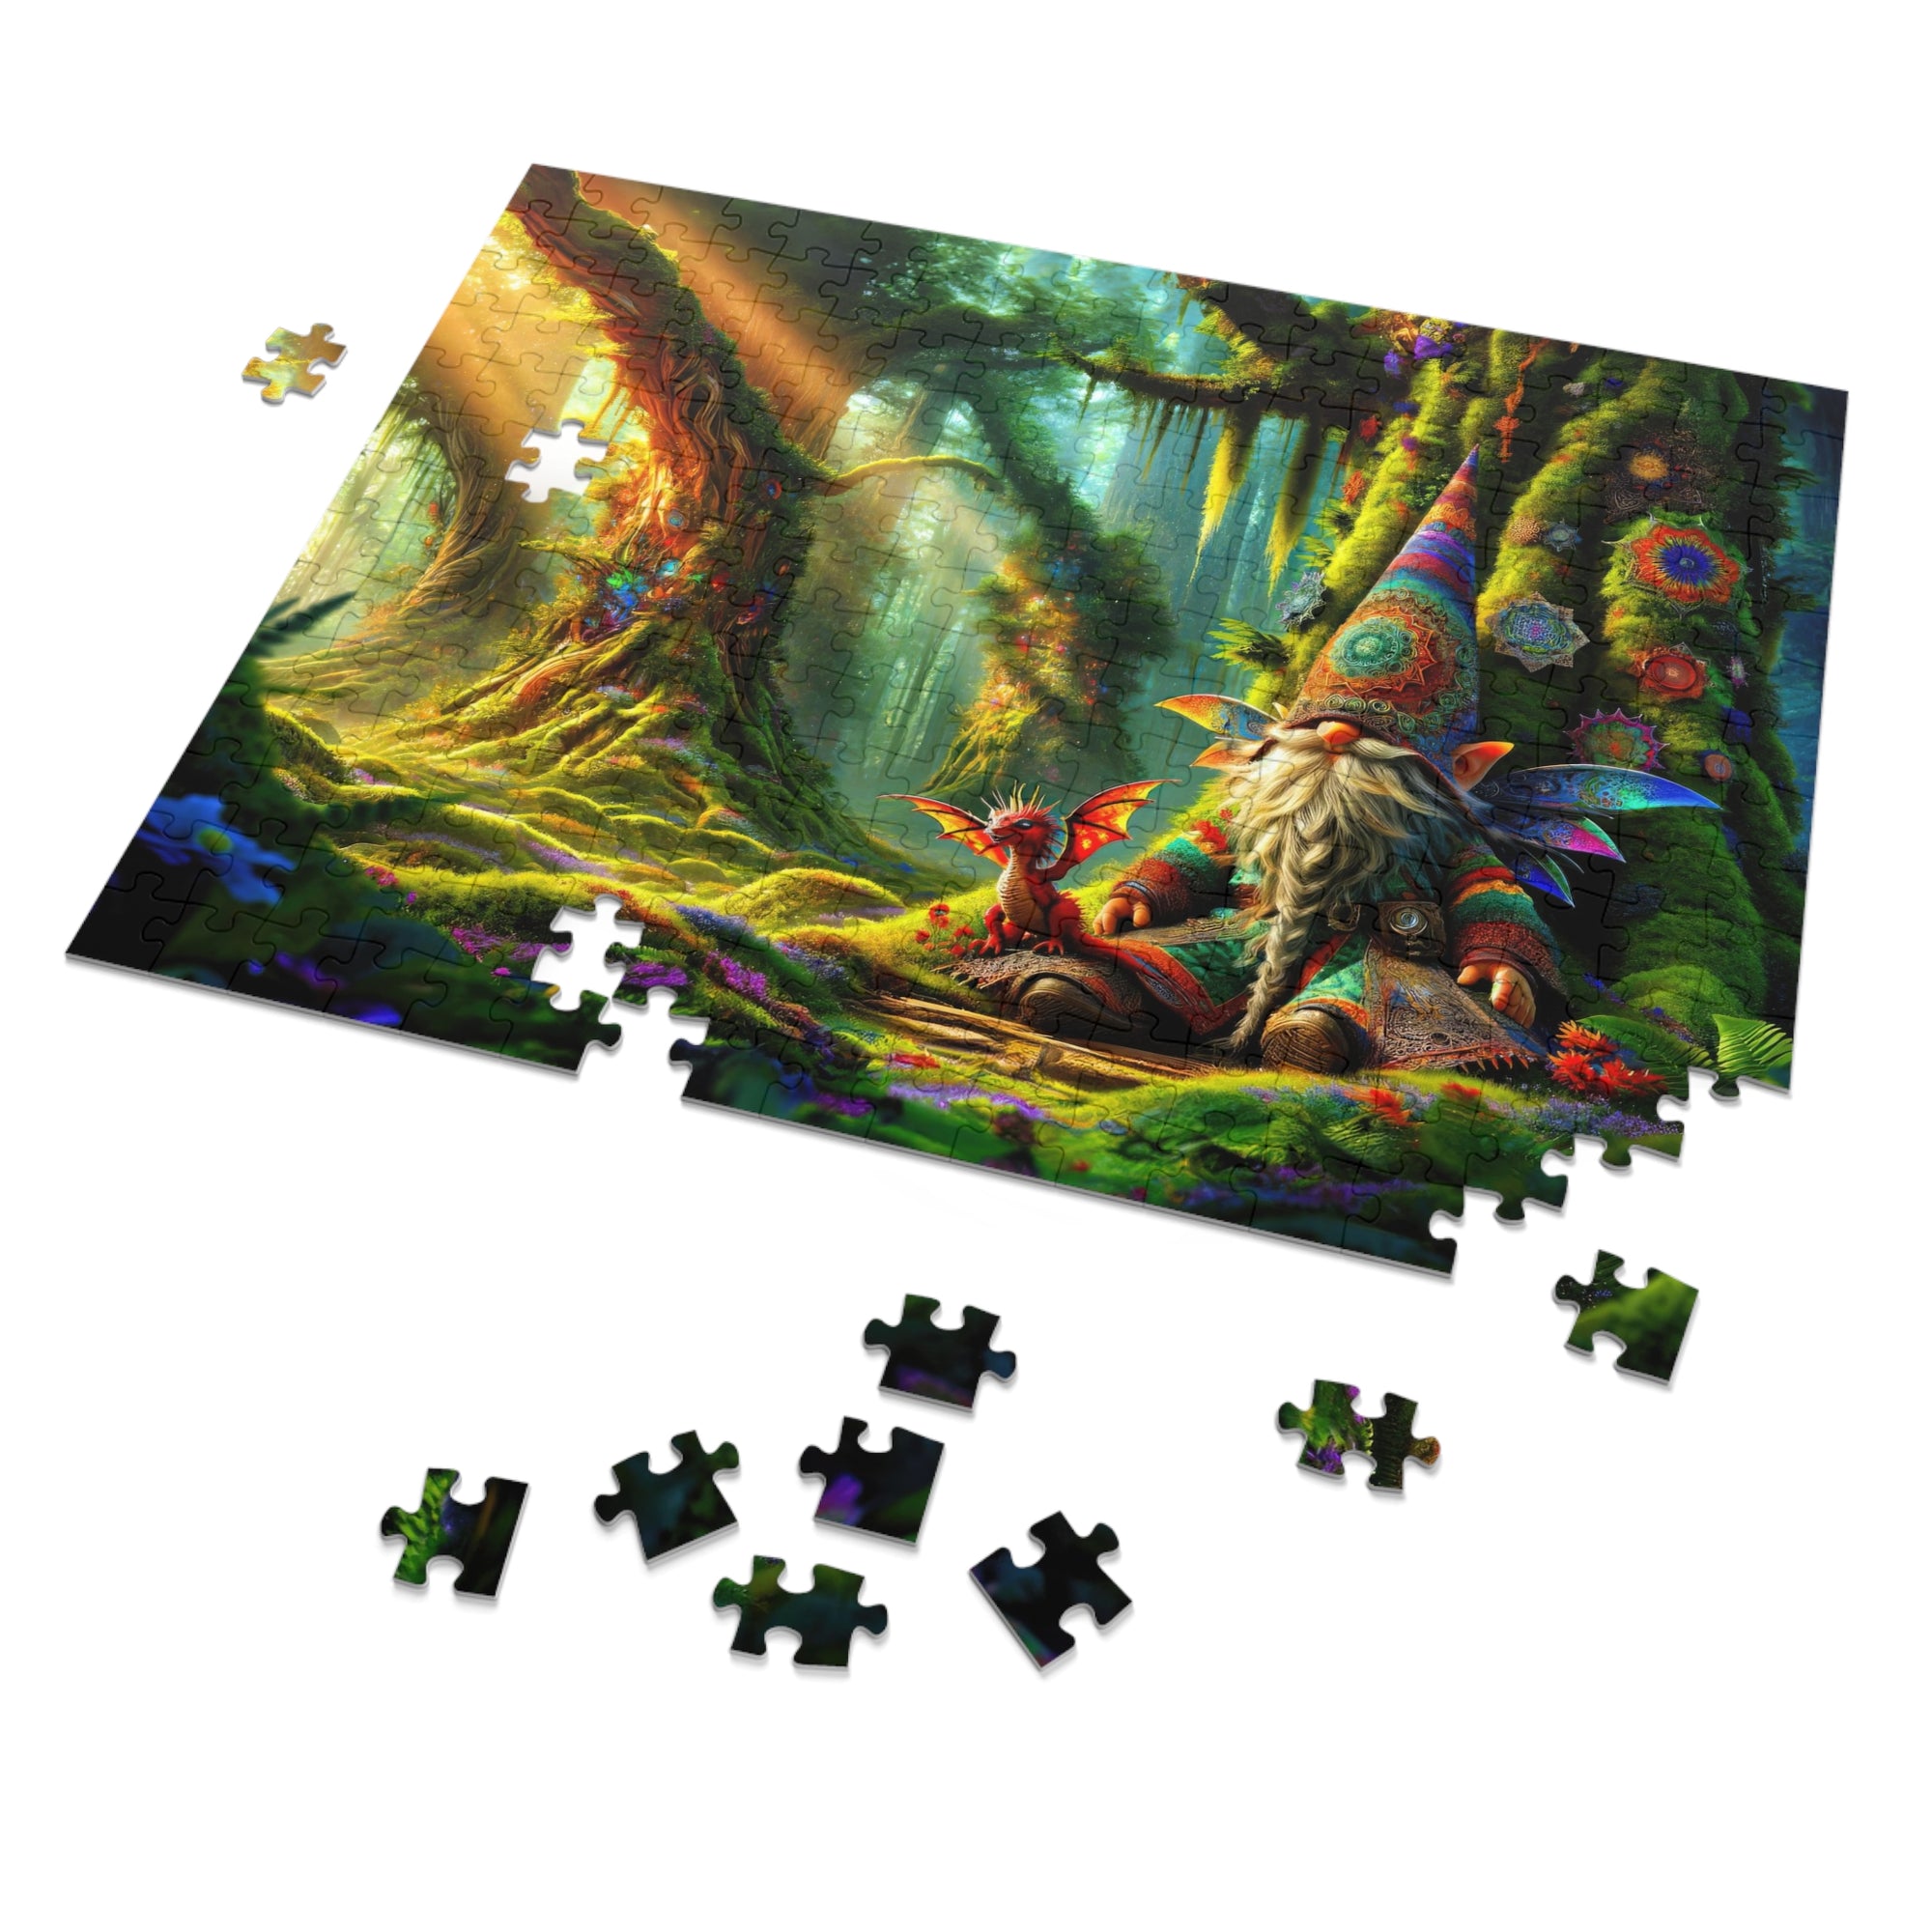 The Gnome's Enchanted Slumber Jigsaw Puzzle